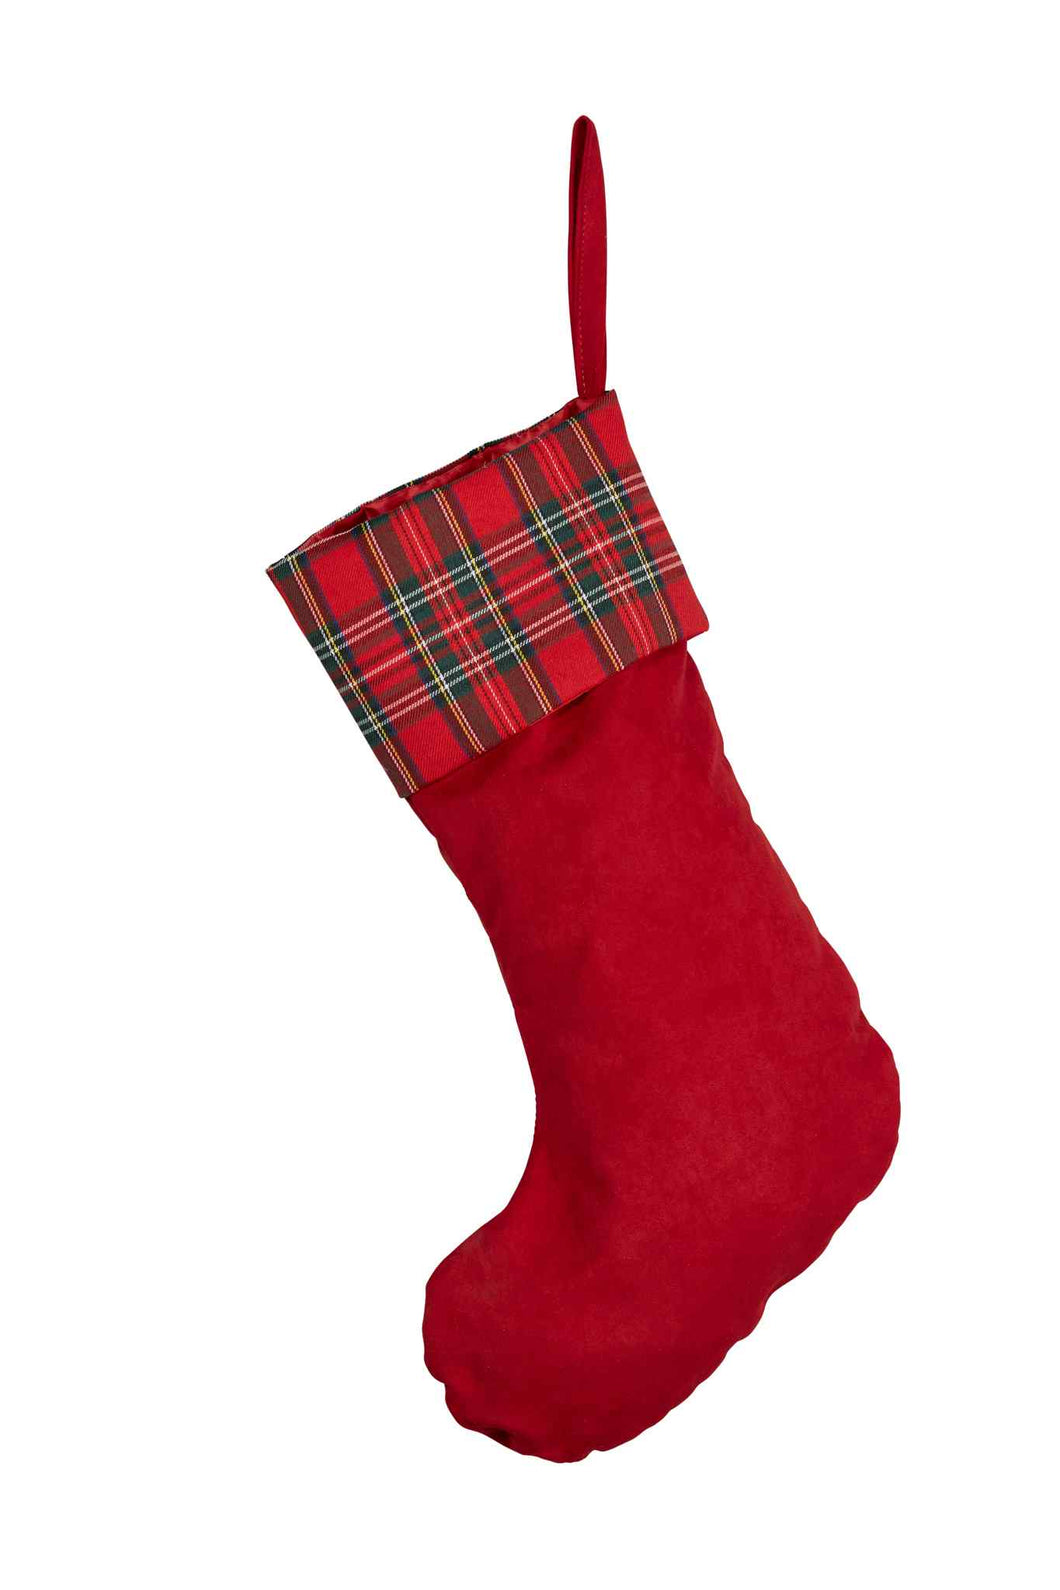 Red Christmas Stocking With Tartan Trim